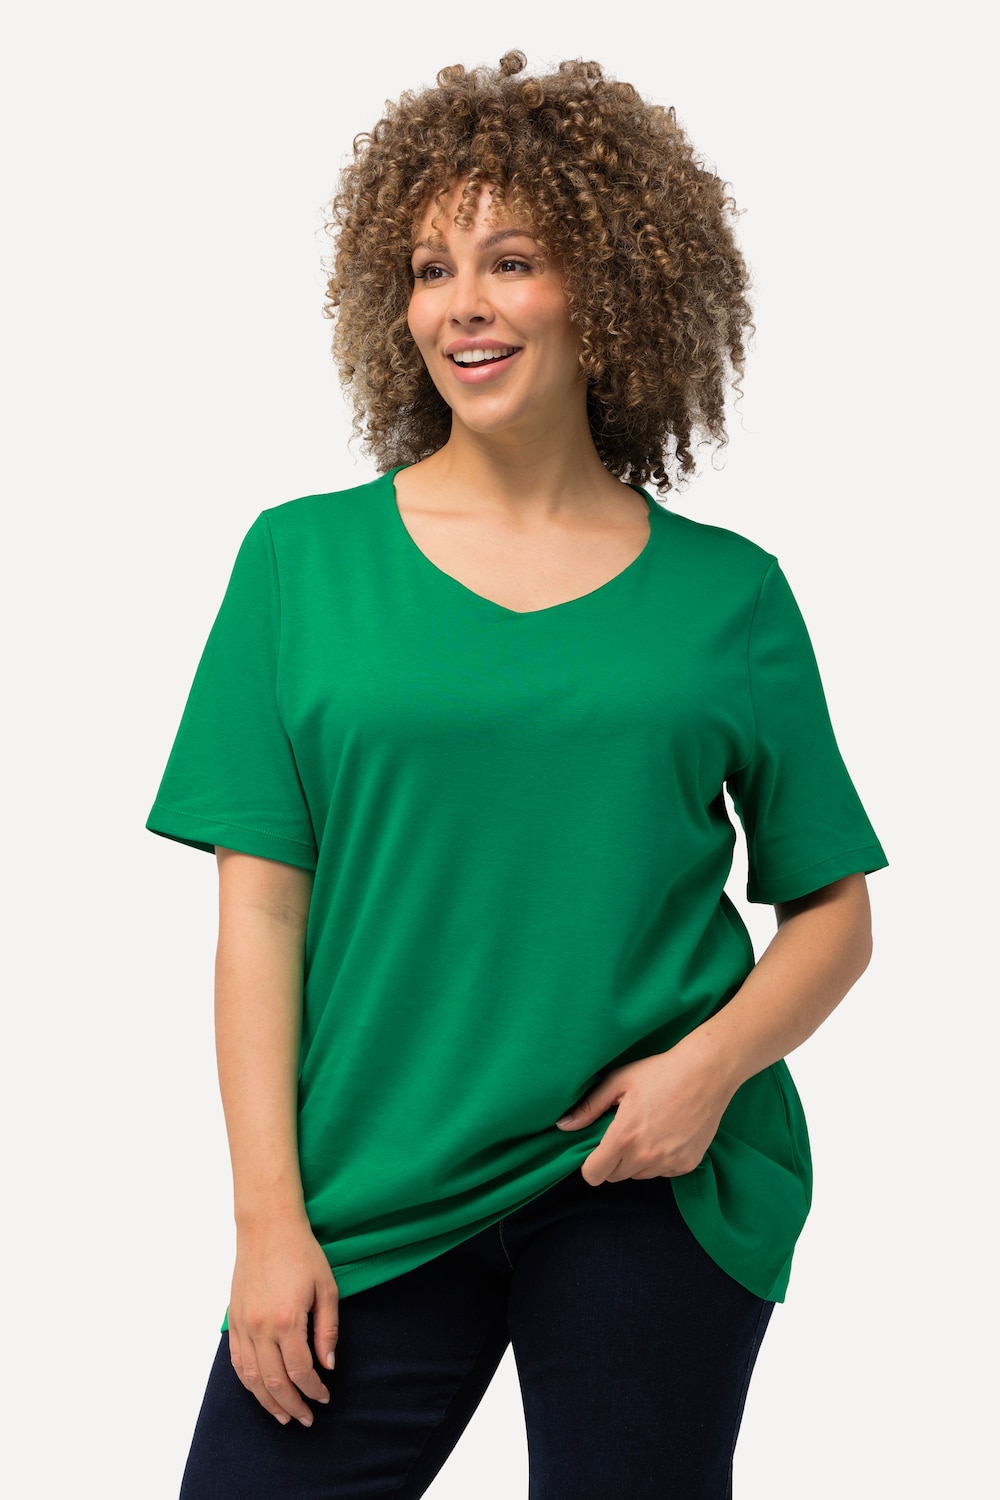 Große Größen Shirt, Damen, grün, Größe: 58/60, Baumwolle, Ulla Popken